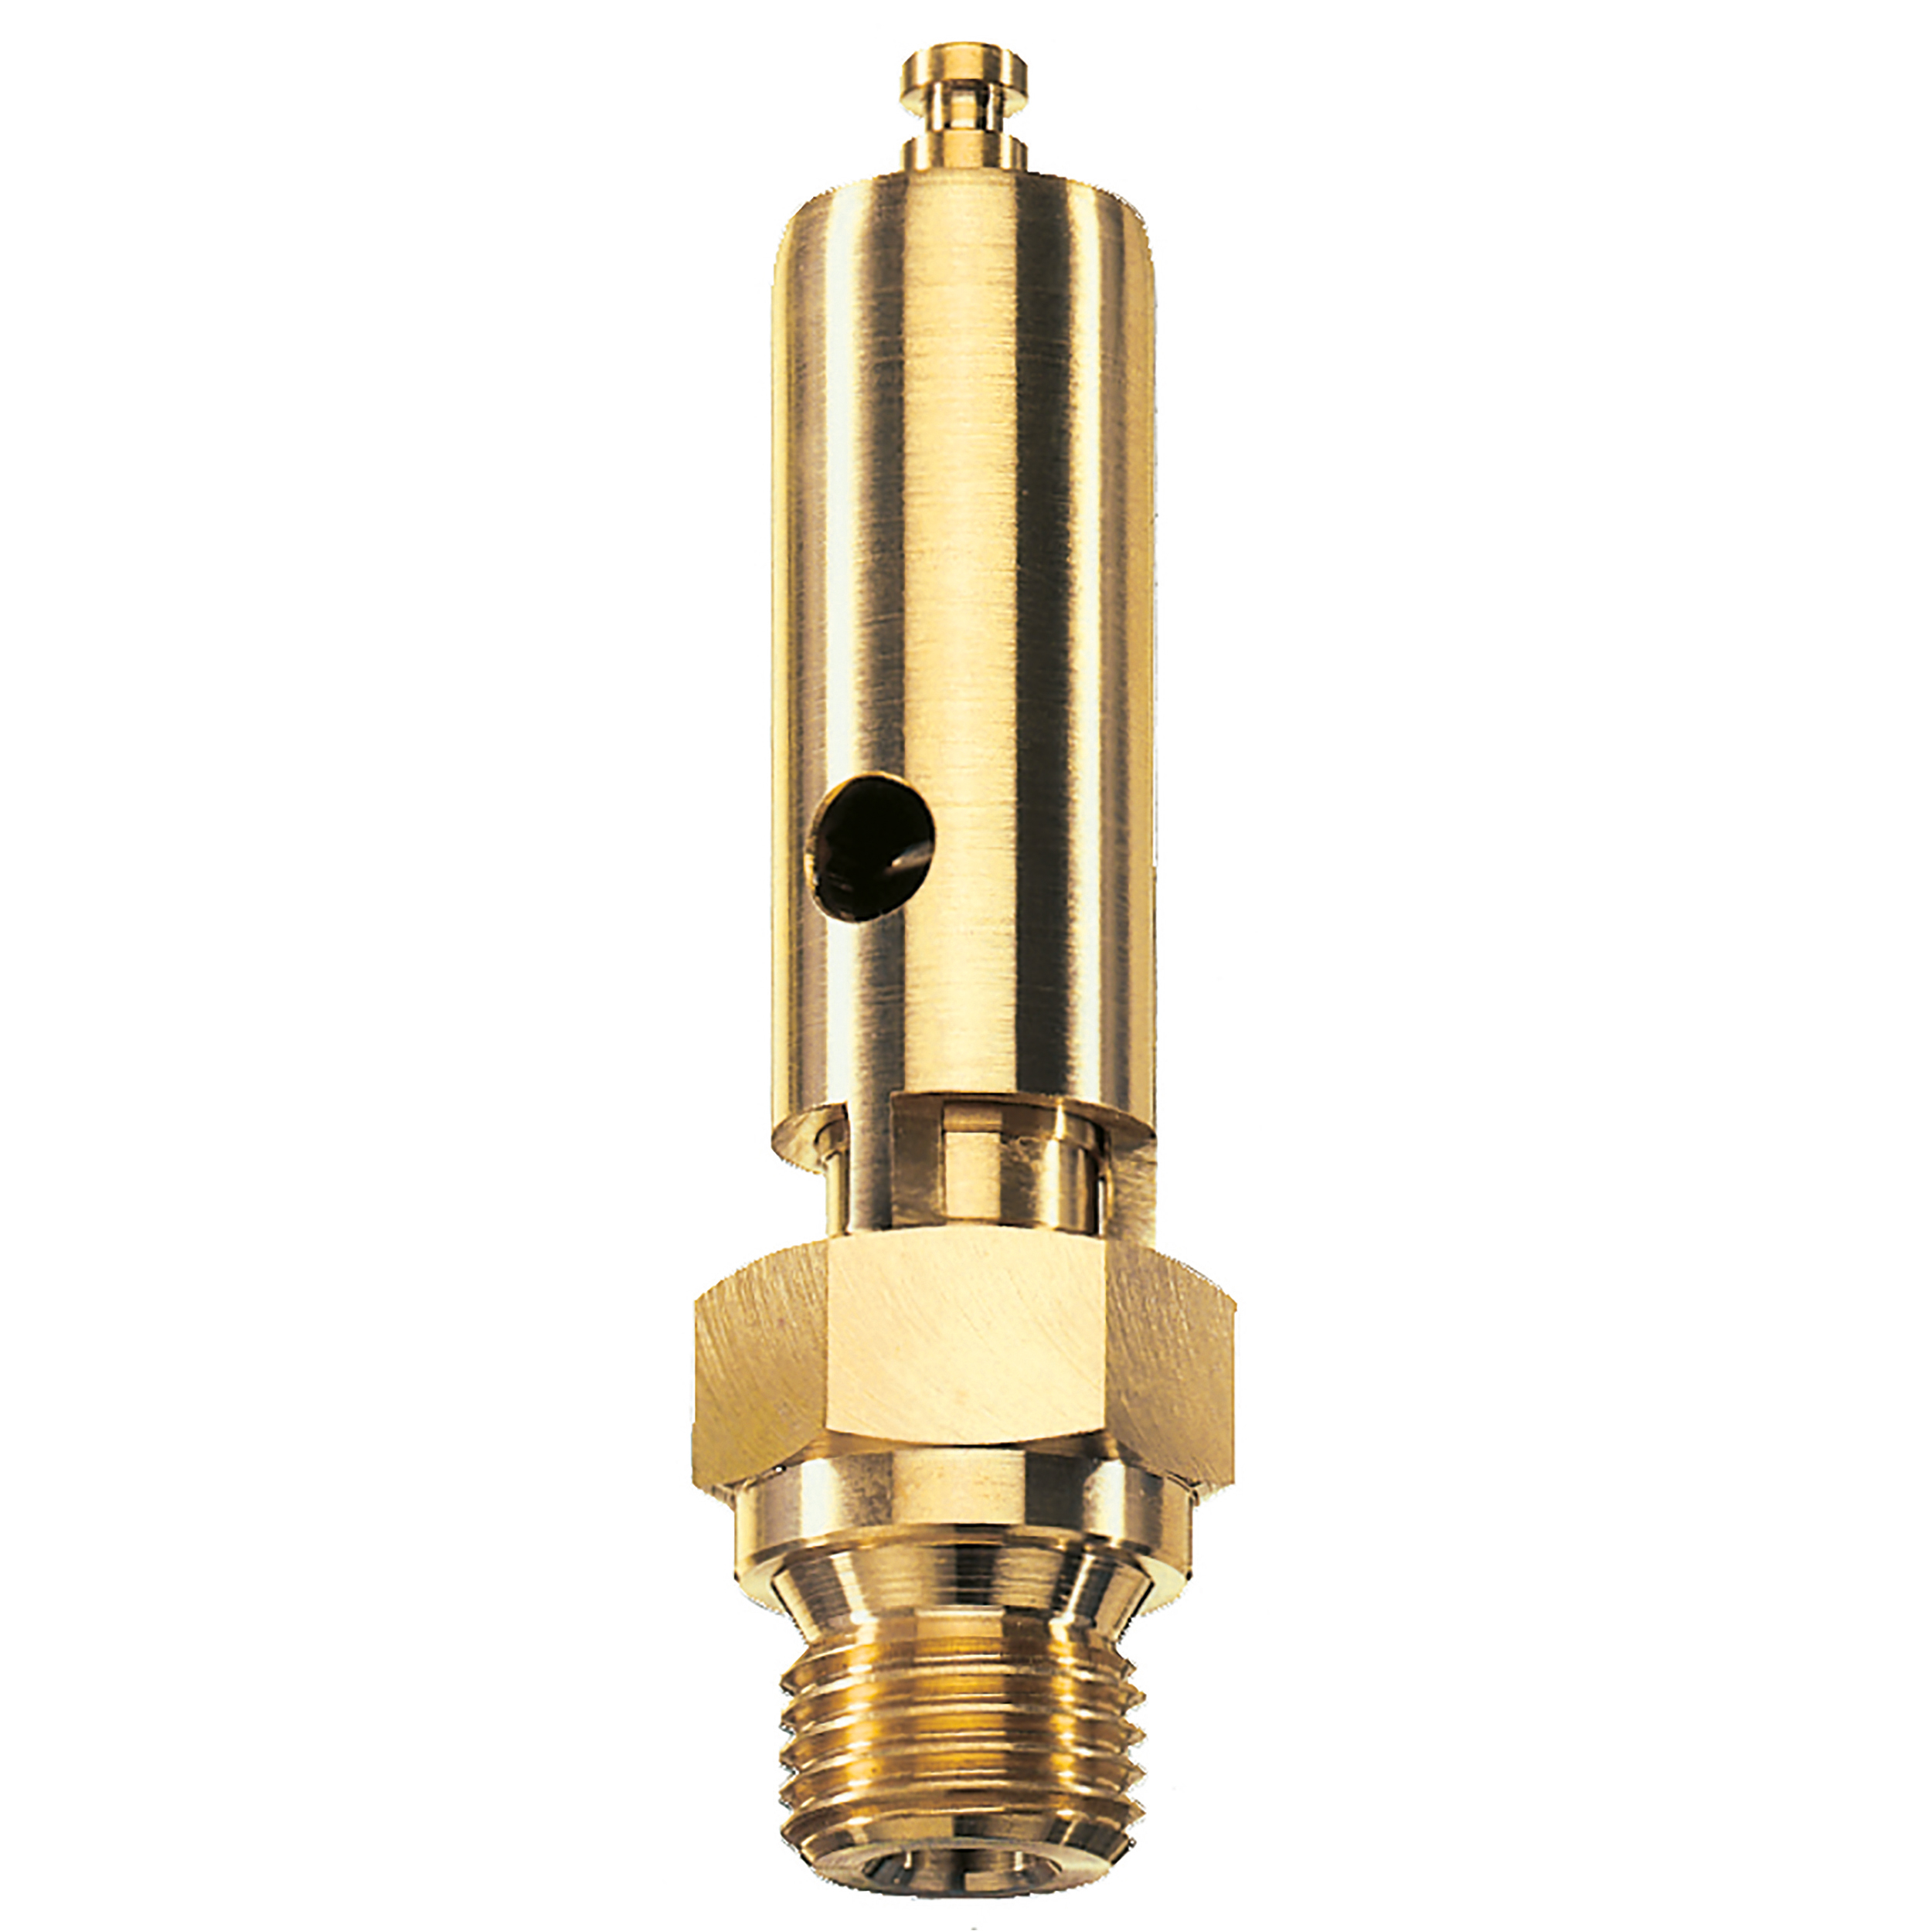 Component-tested safety valve DN 6, G¼, pressure: 10.1-13 bar